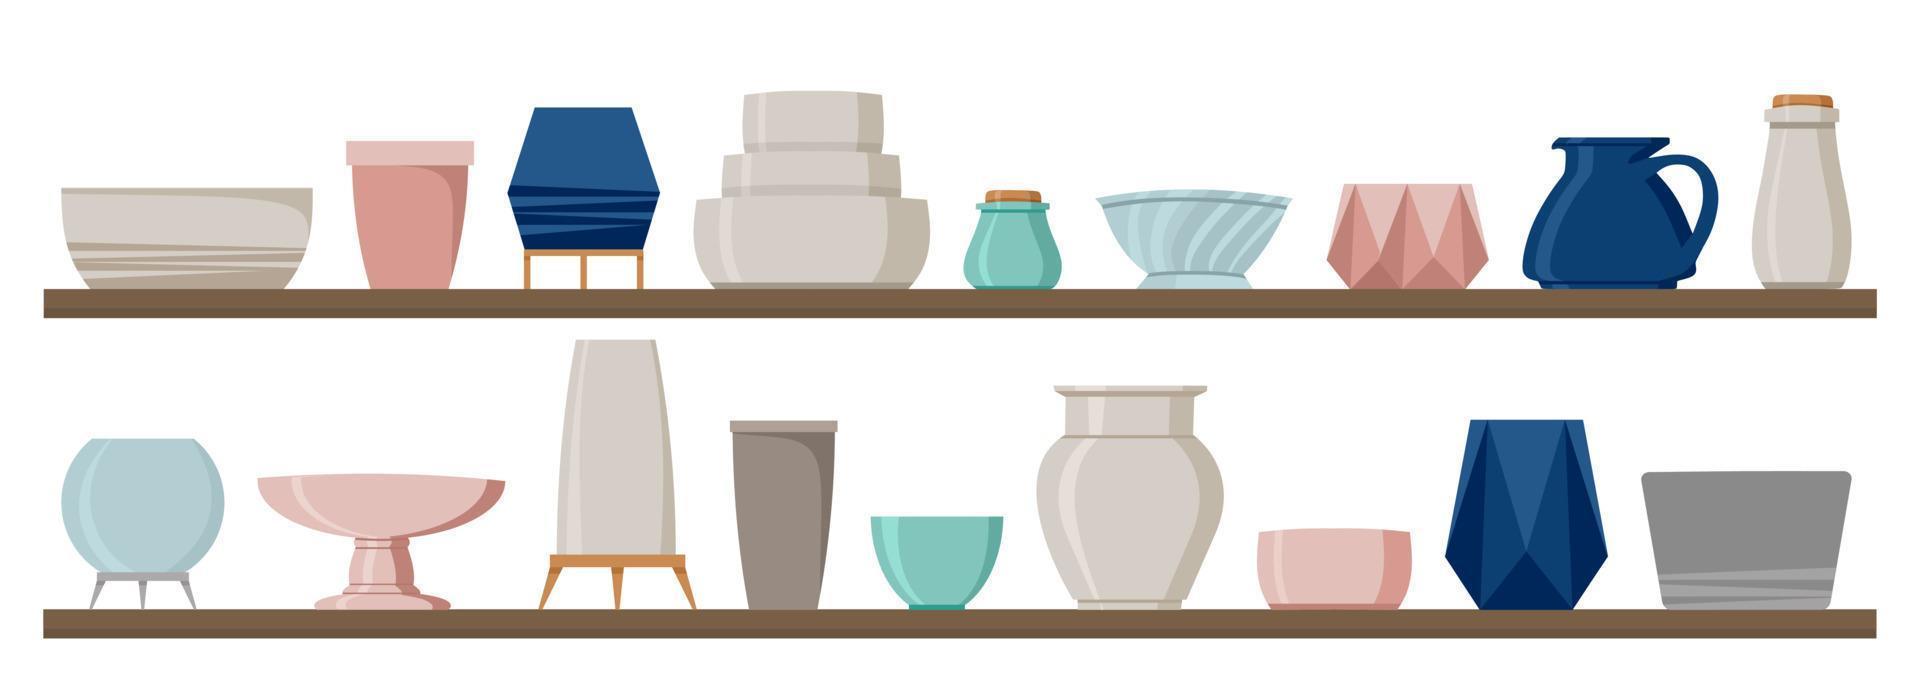 Ceramic tableware on the shelf set. Vector illustration